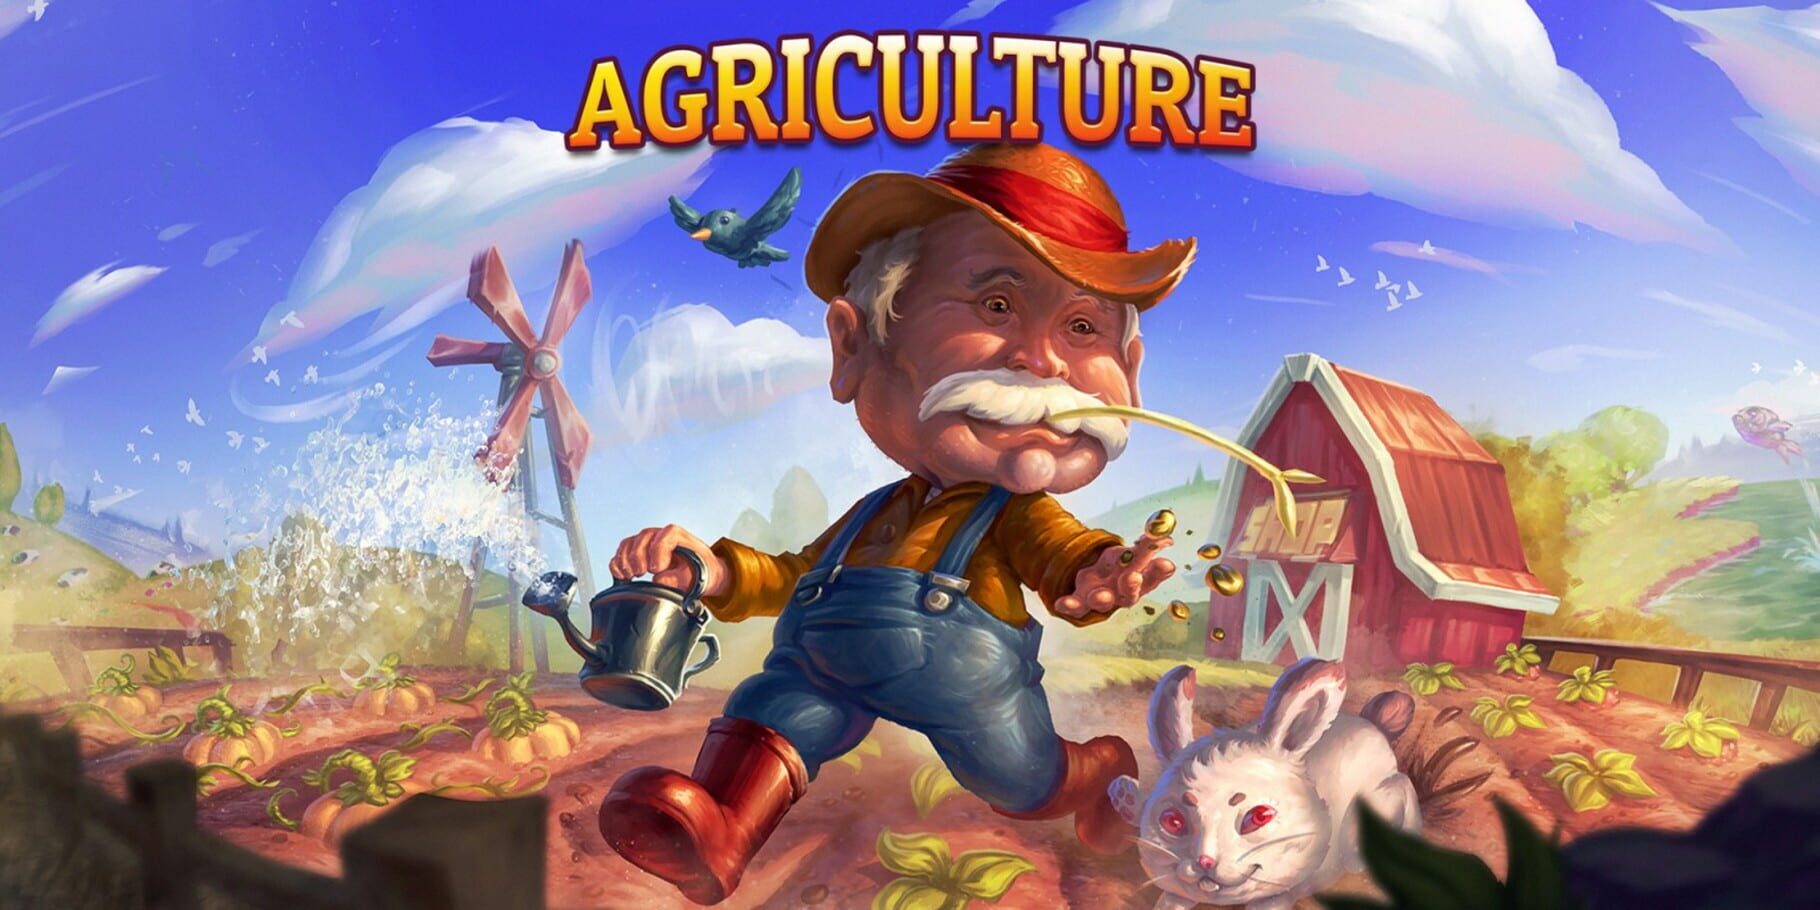 Agriculture artwork